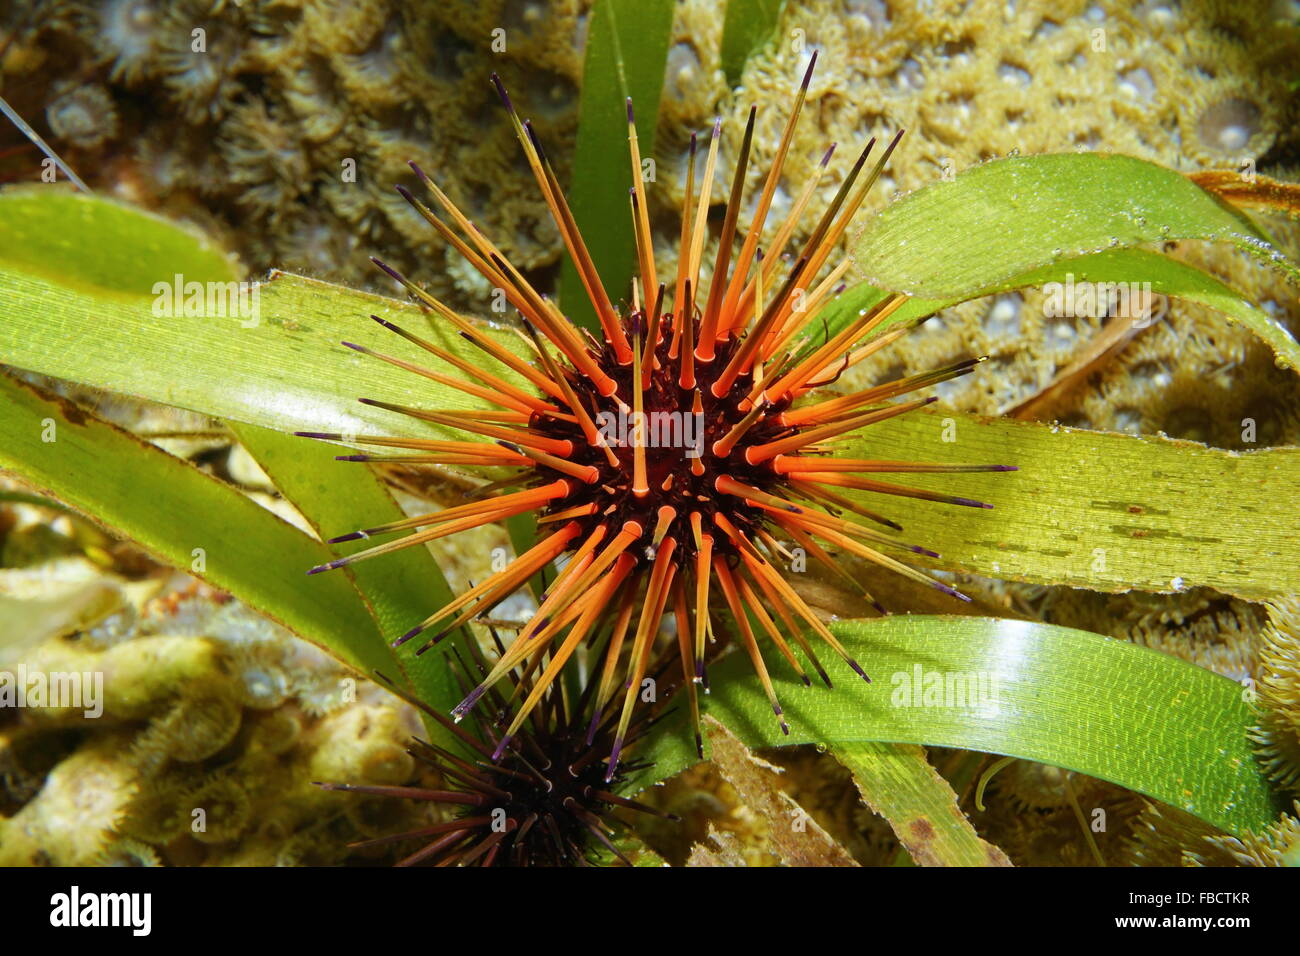 Reef urchin, Echinometra viridis, underwater on seagrass, Caribbean sea Stock Photo